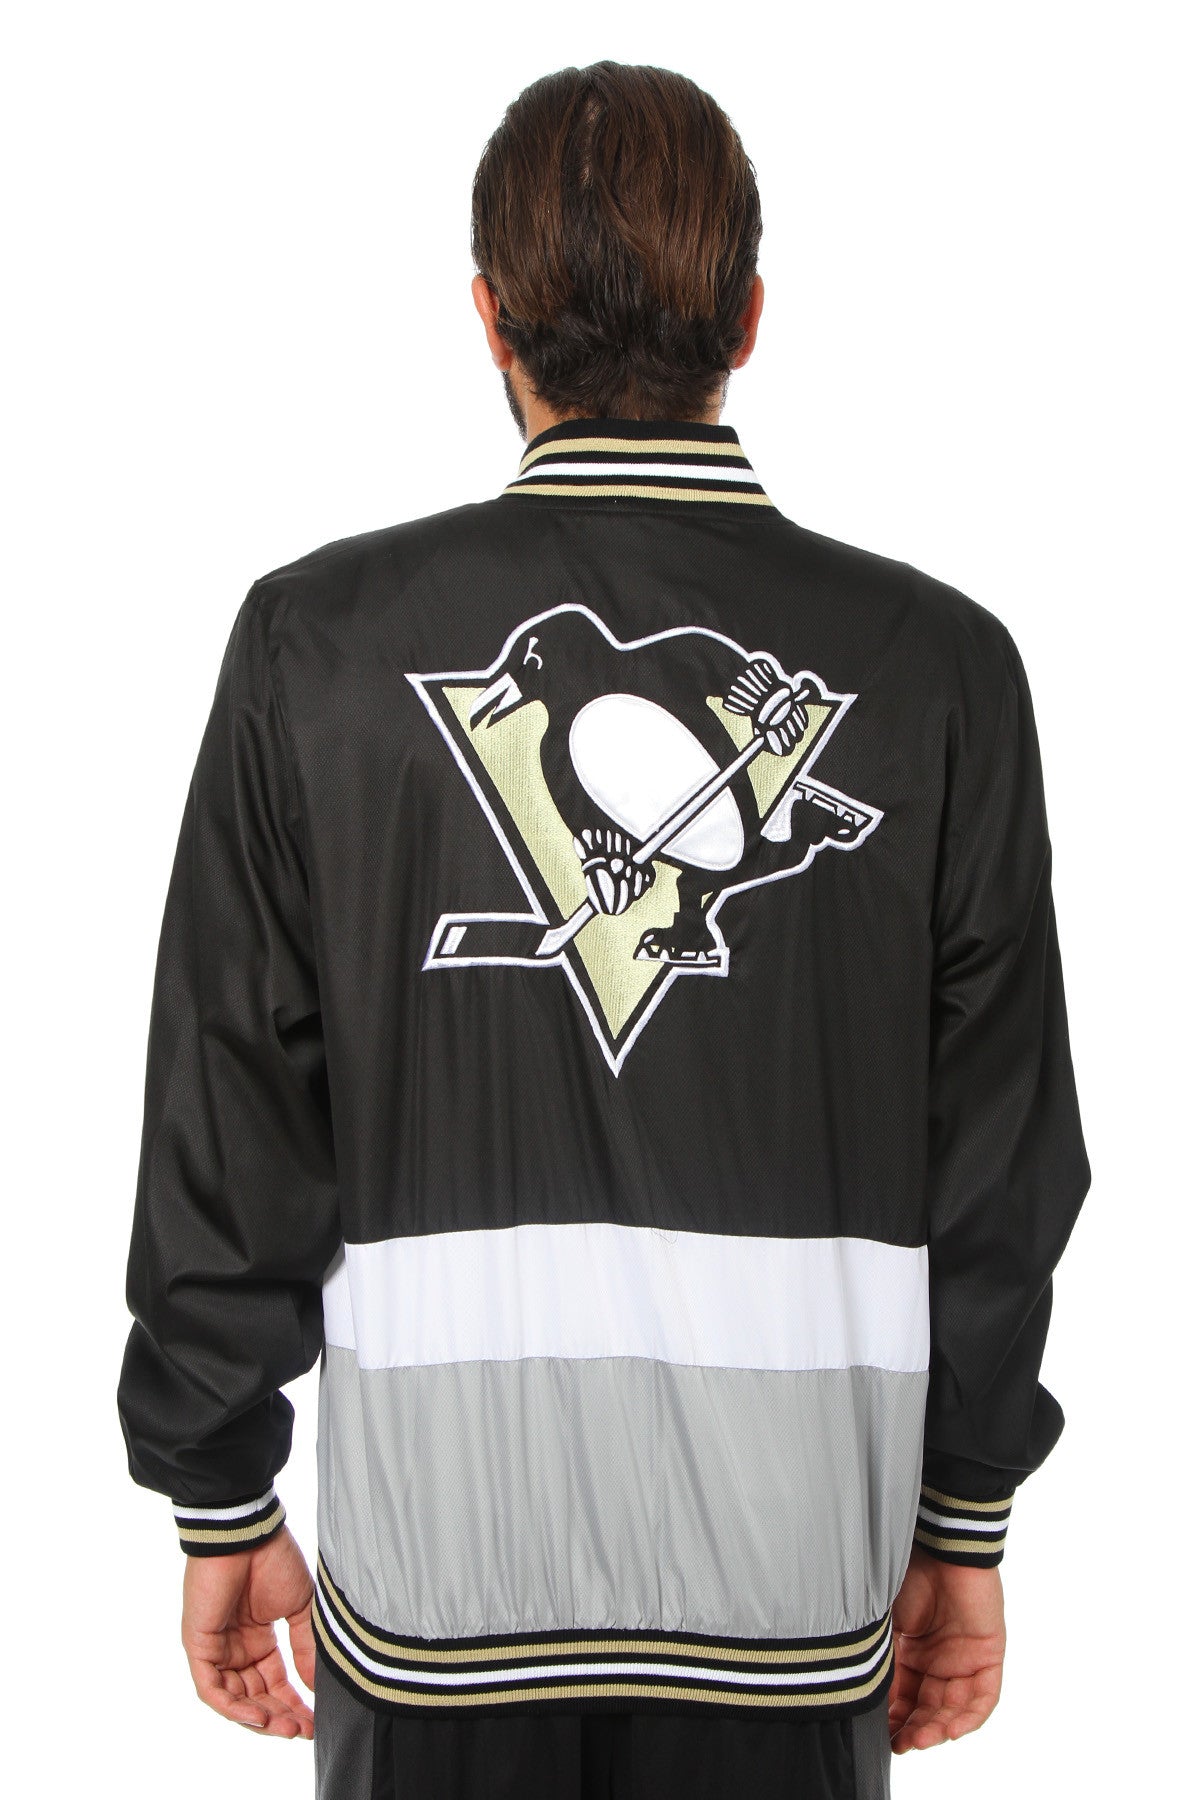 Pittsburgh Penguins Ripstop Nylon Jacket